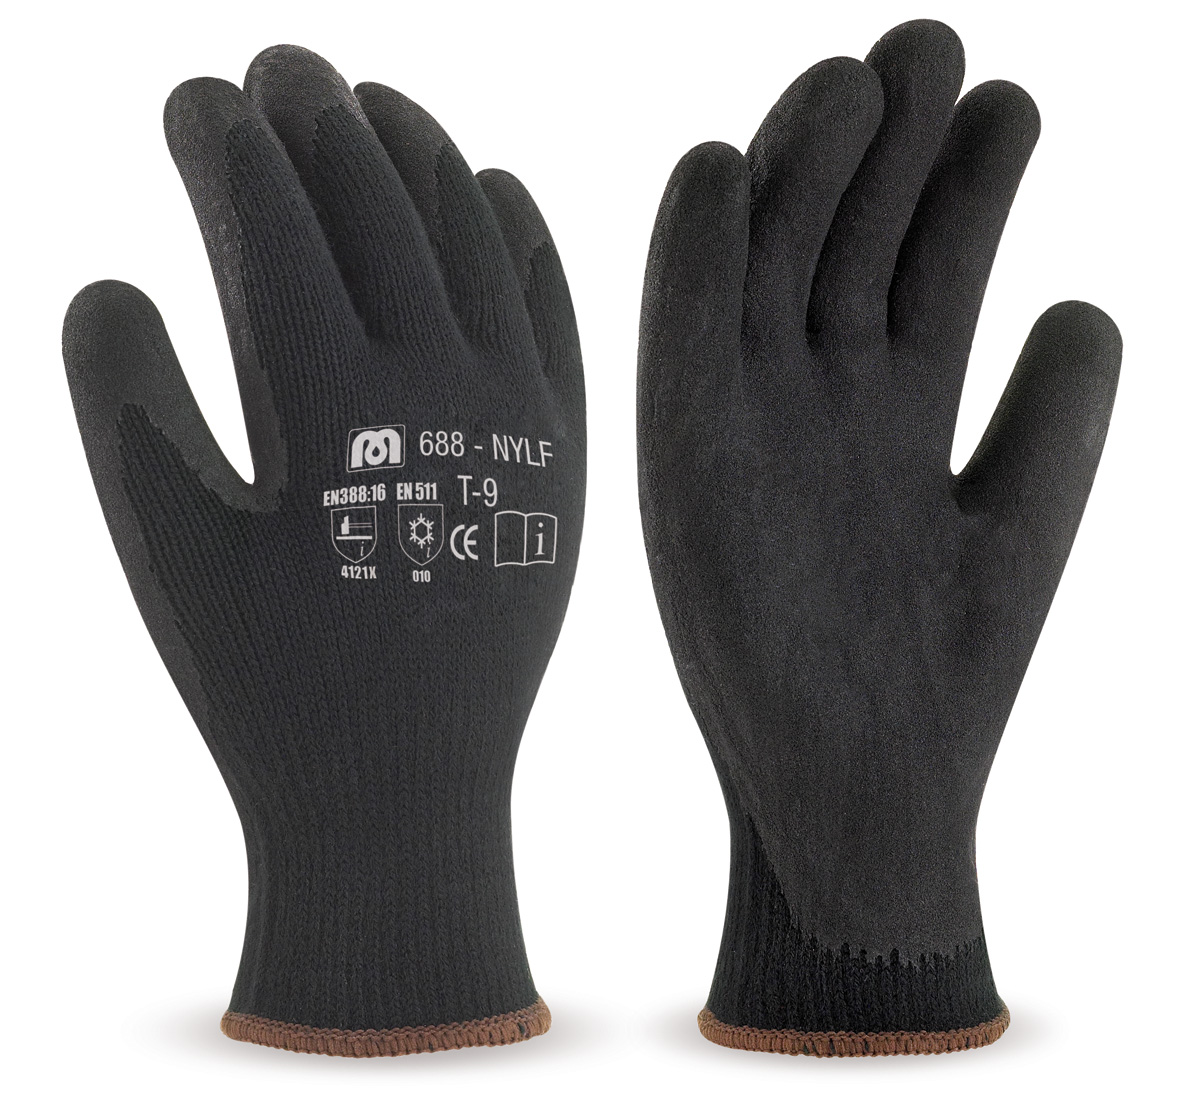 688-NYLF Work Gloves Nylon Black nylon glove with covering of black coloured latex. 